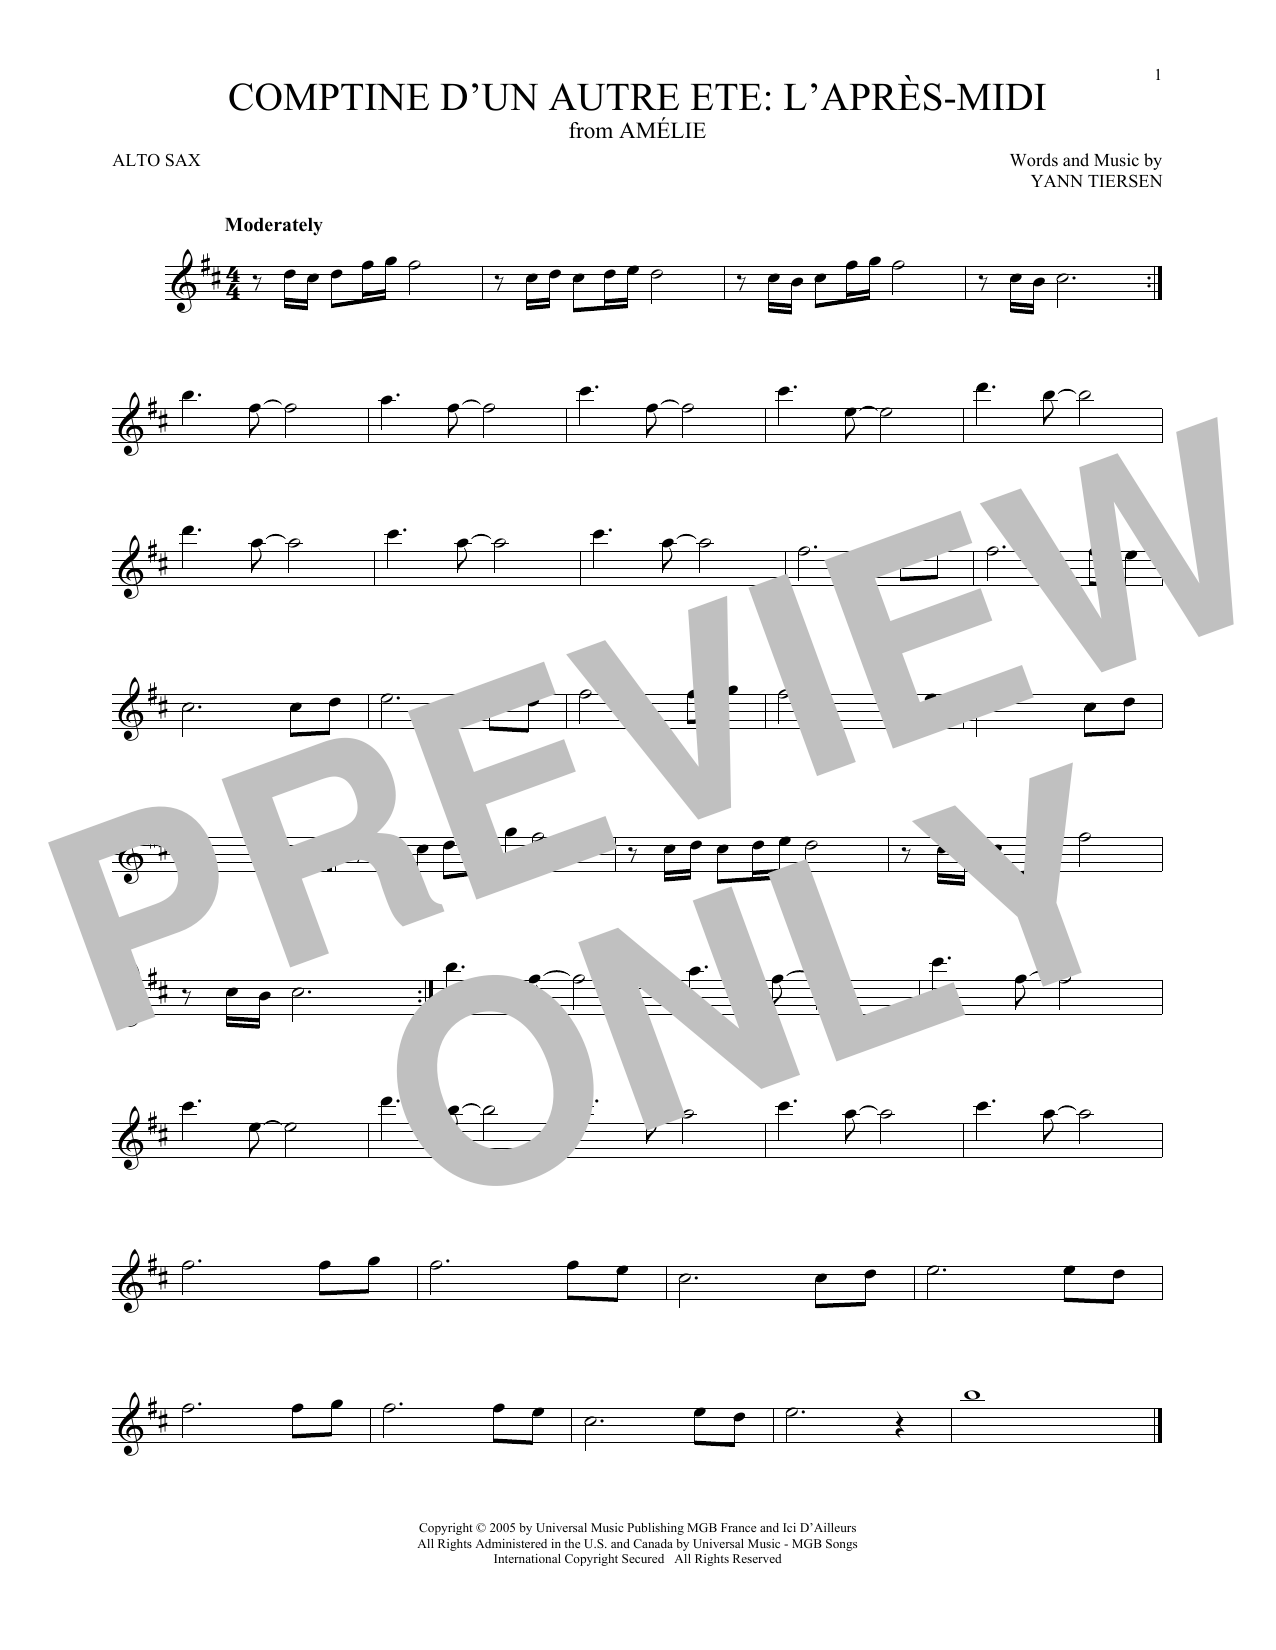 Download Yann Tiersen Comptine d'un autre été: L'après-midi (from Amelie) Sheet Music and learn how to play Big Note Piano PDF digital score in minutes